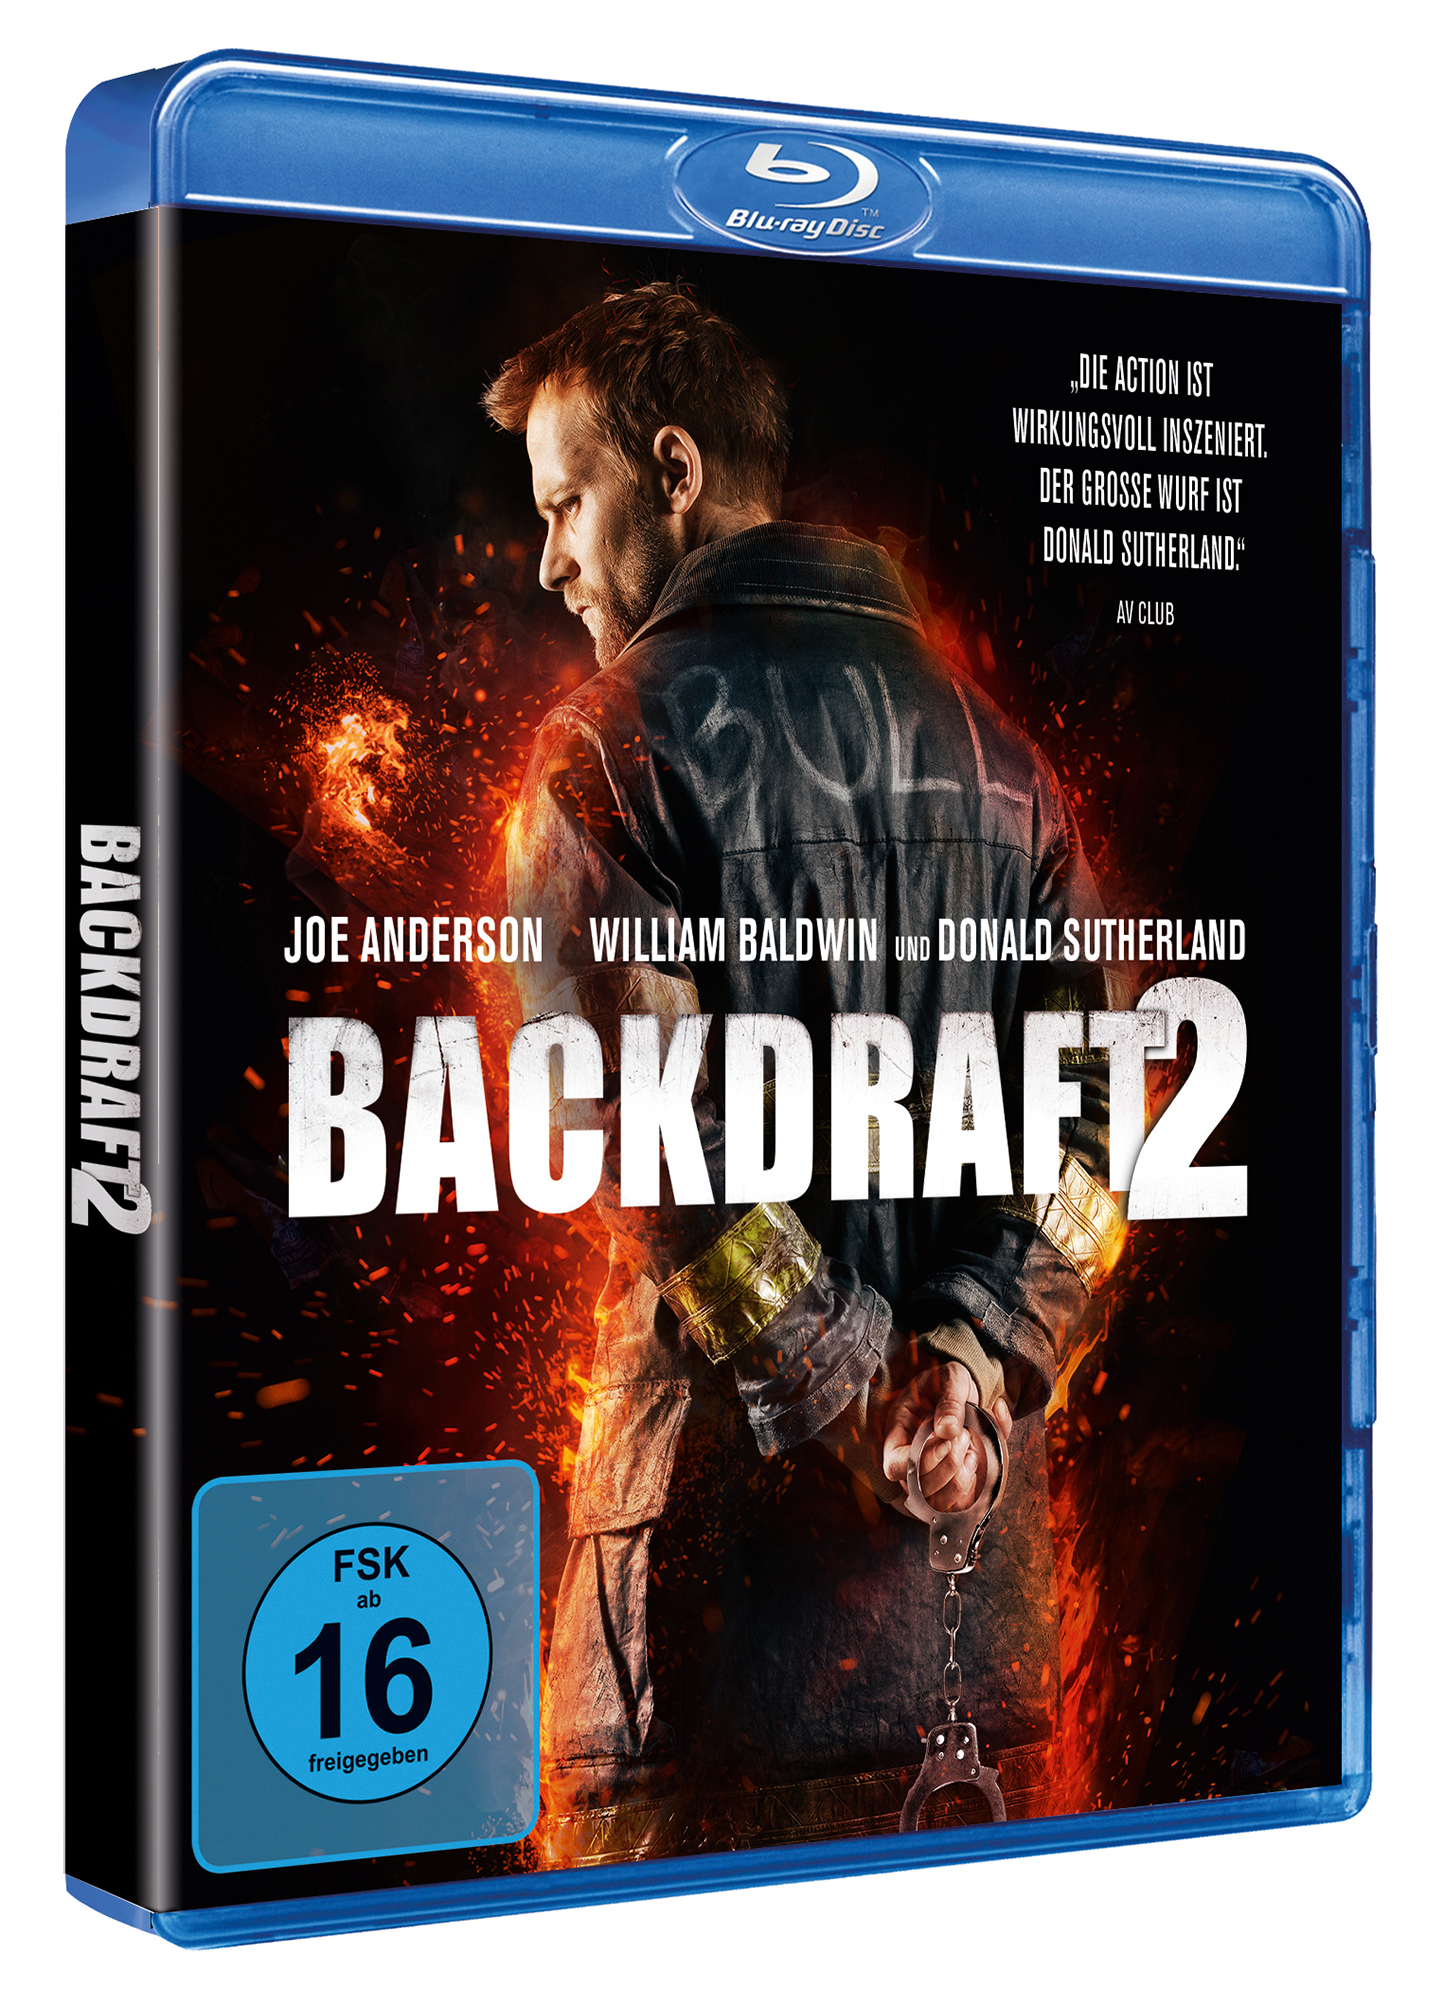 Backdraft 2 (Blu-ray)  Thumbnail 2